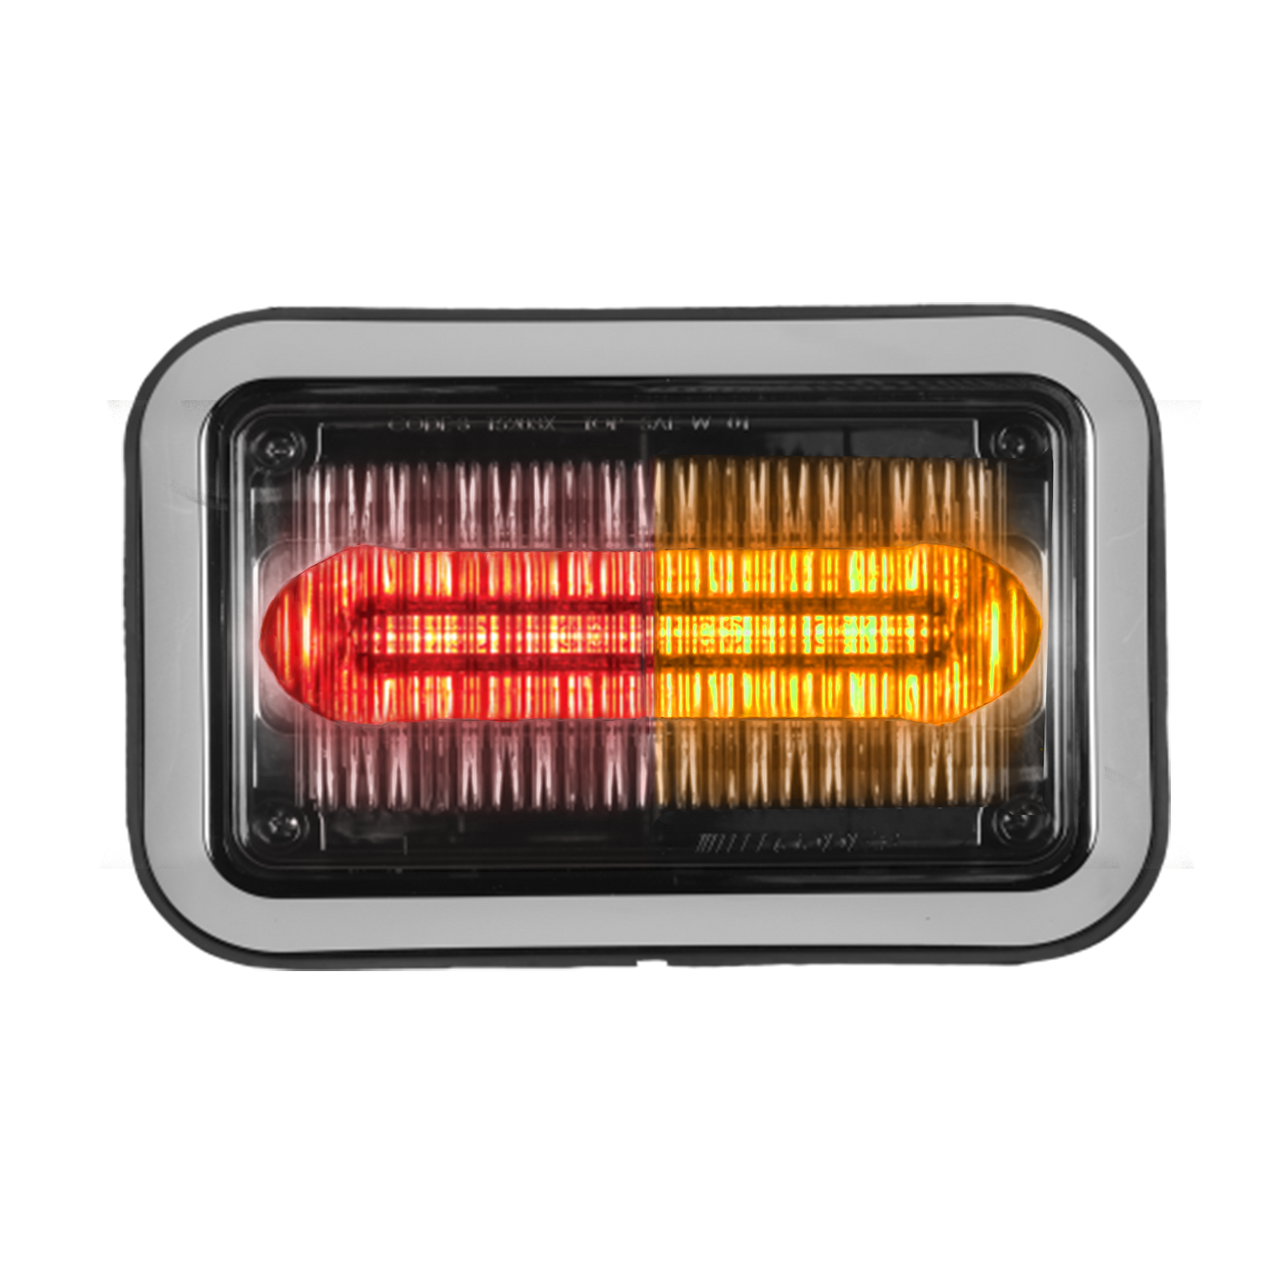 Code-3 - PRIZM II Perimeter Lights - 4x6 Inch, Available in Single, Split, or Steady Burn, 12 LED per lighthead, Optional Chrome Bezel